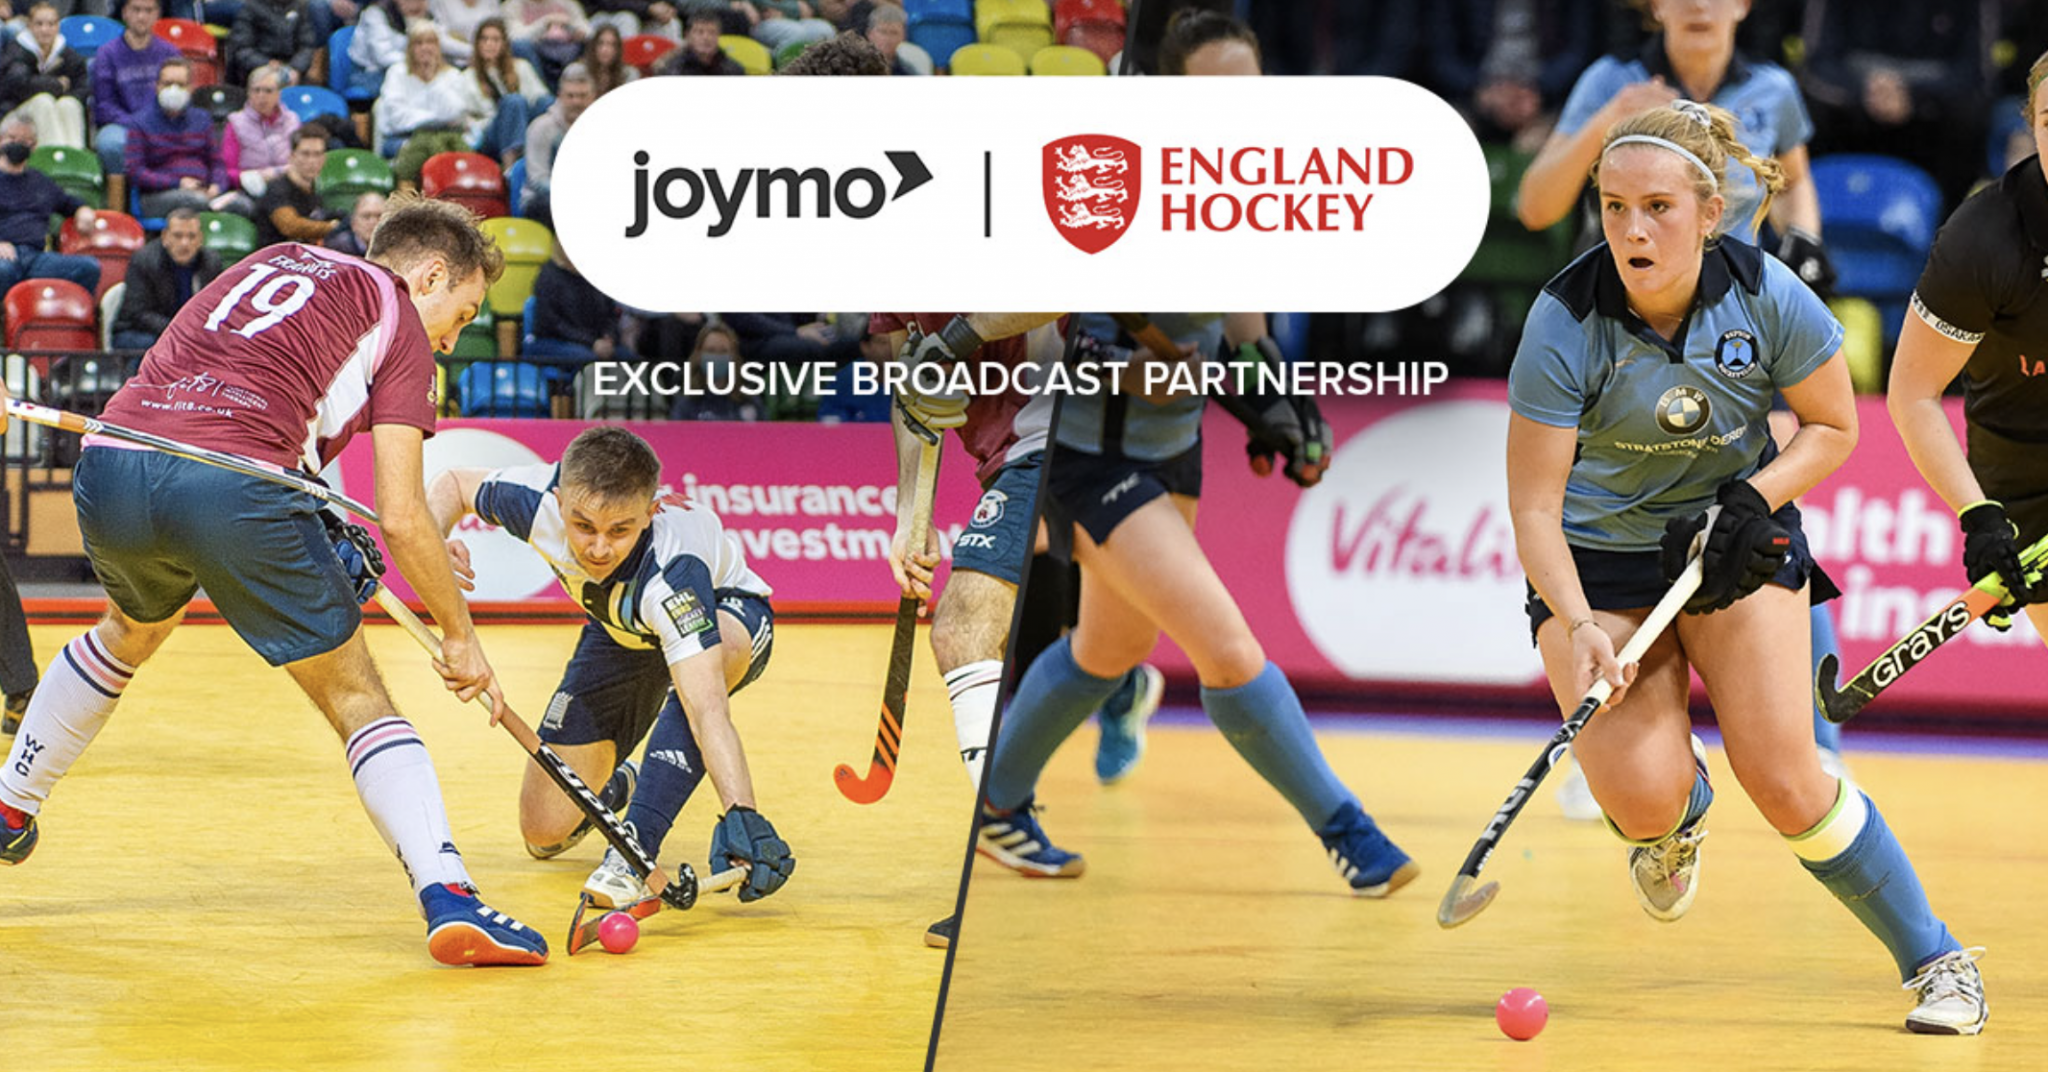 England Hockey launches streaming service with Joymo